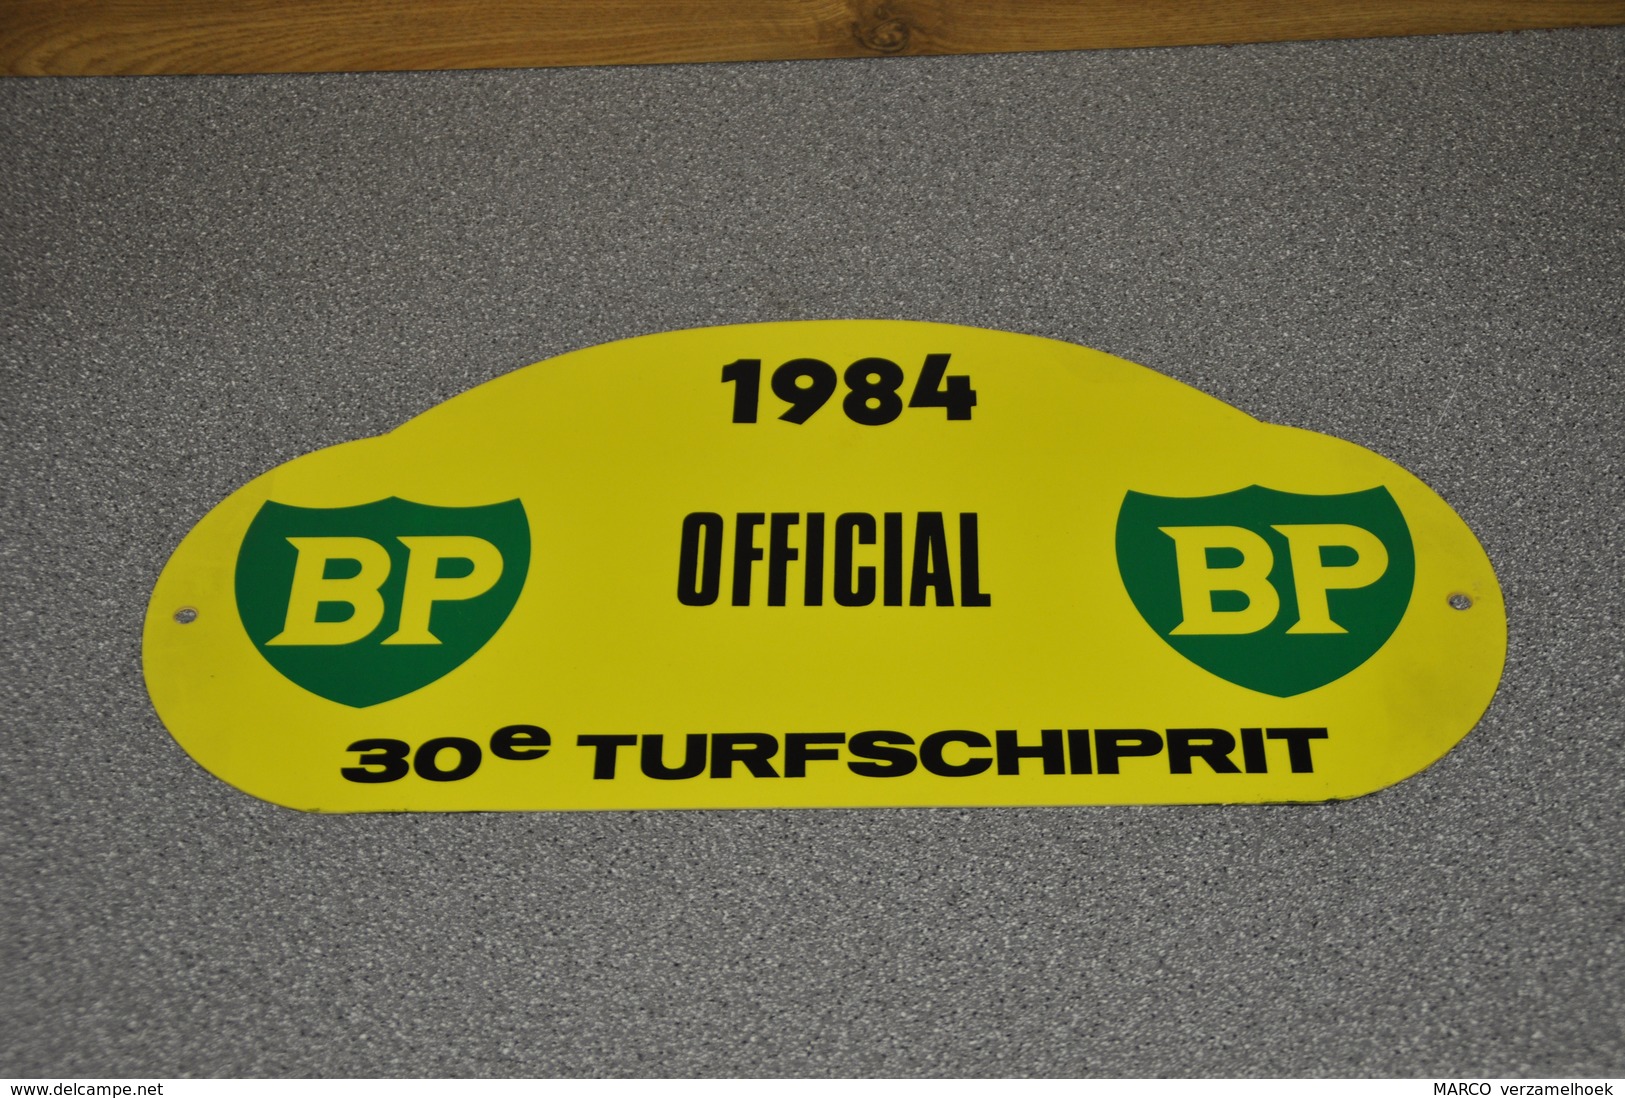 Rally Plaat-rallye Plaque Plastic: 30e Turfschiprit Breda 1984 OFFICIAL BP - Rallyeschilder